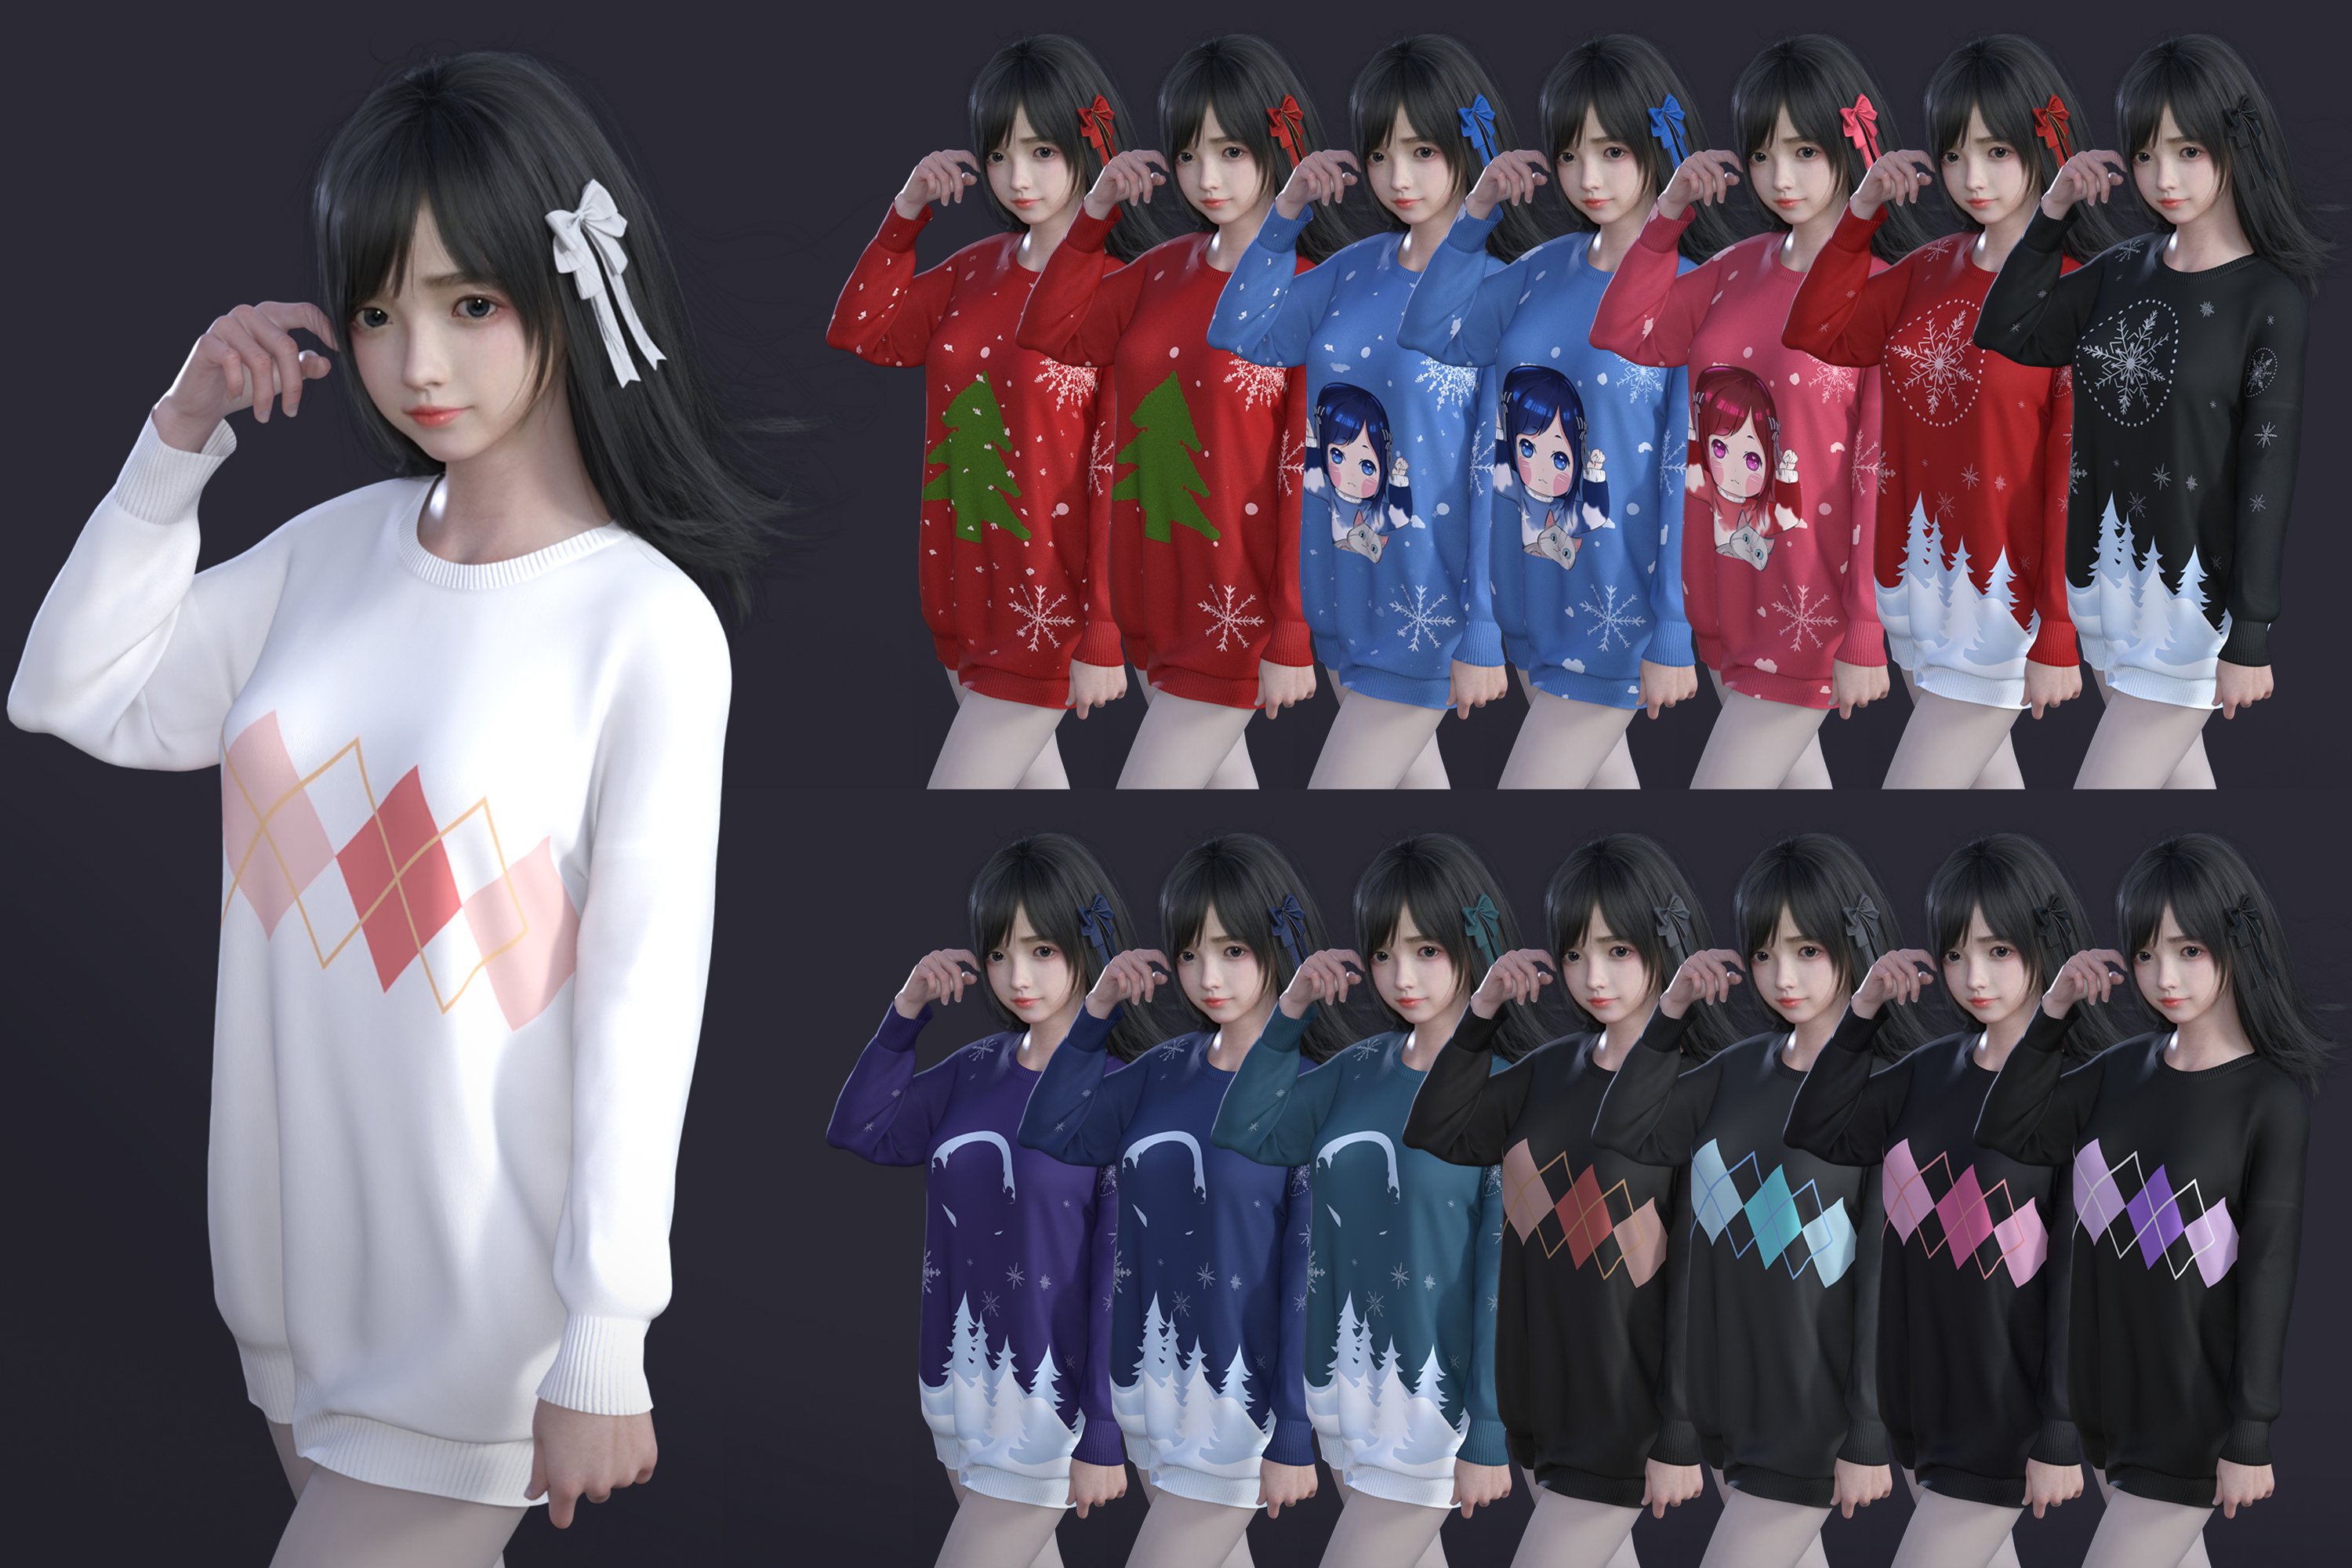 dForce SU Cute Christmas Suit for Genesis 8 and 8.1 Females by: Sue Yee, 3D Models by Daz 3D